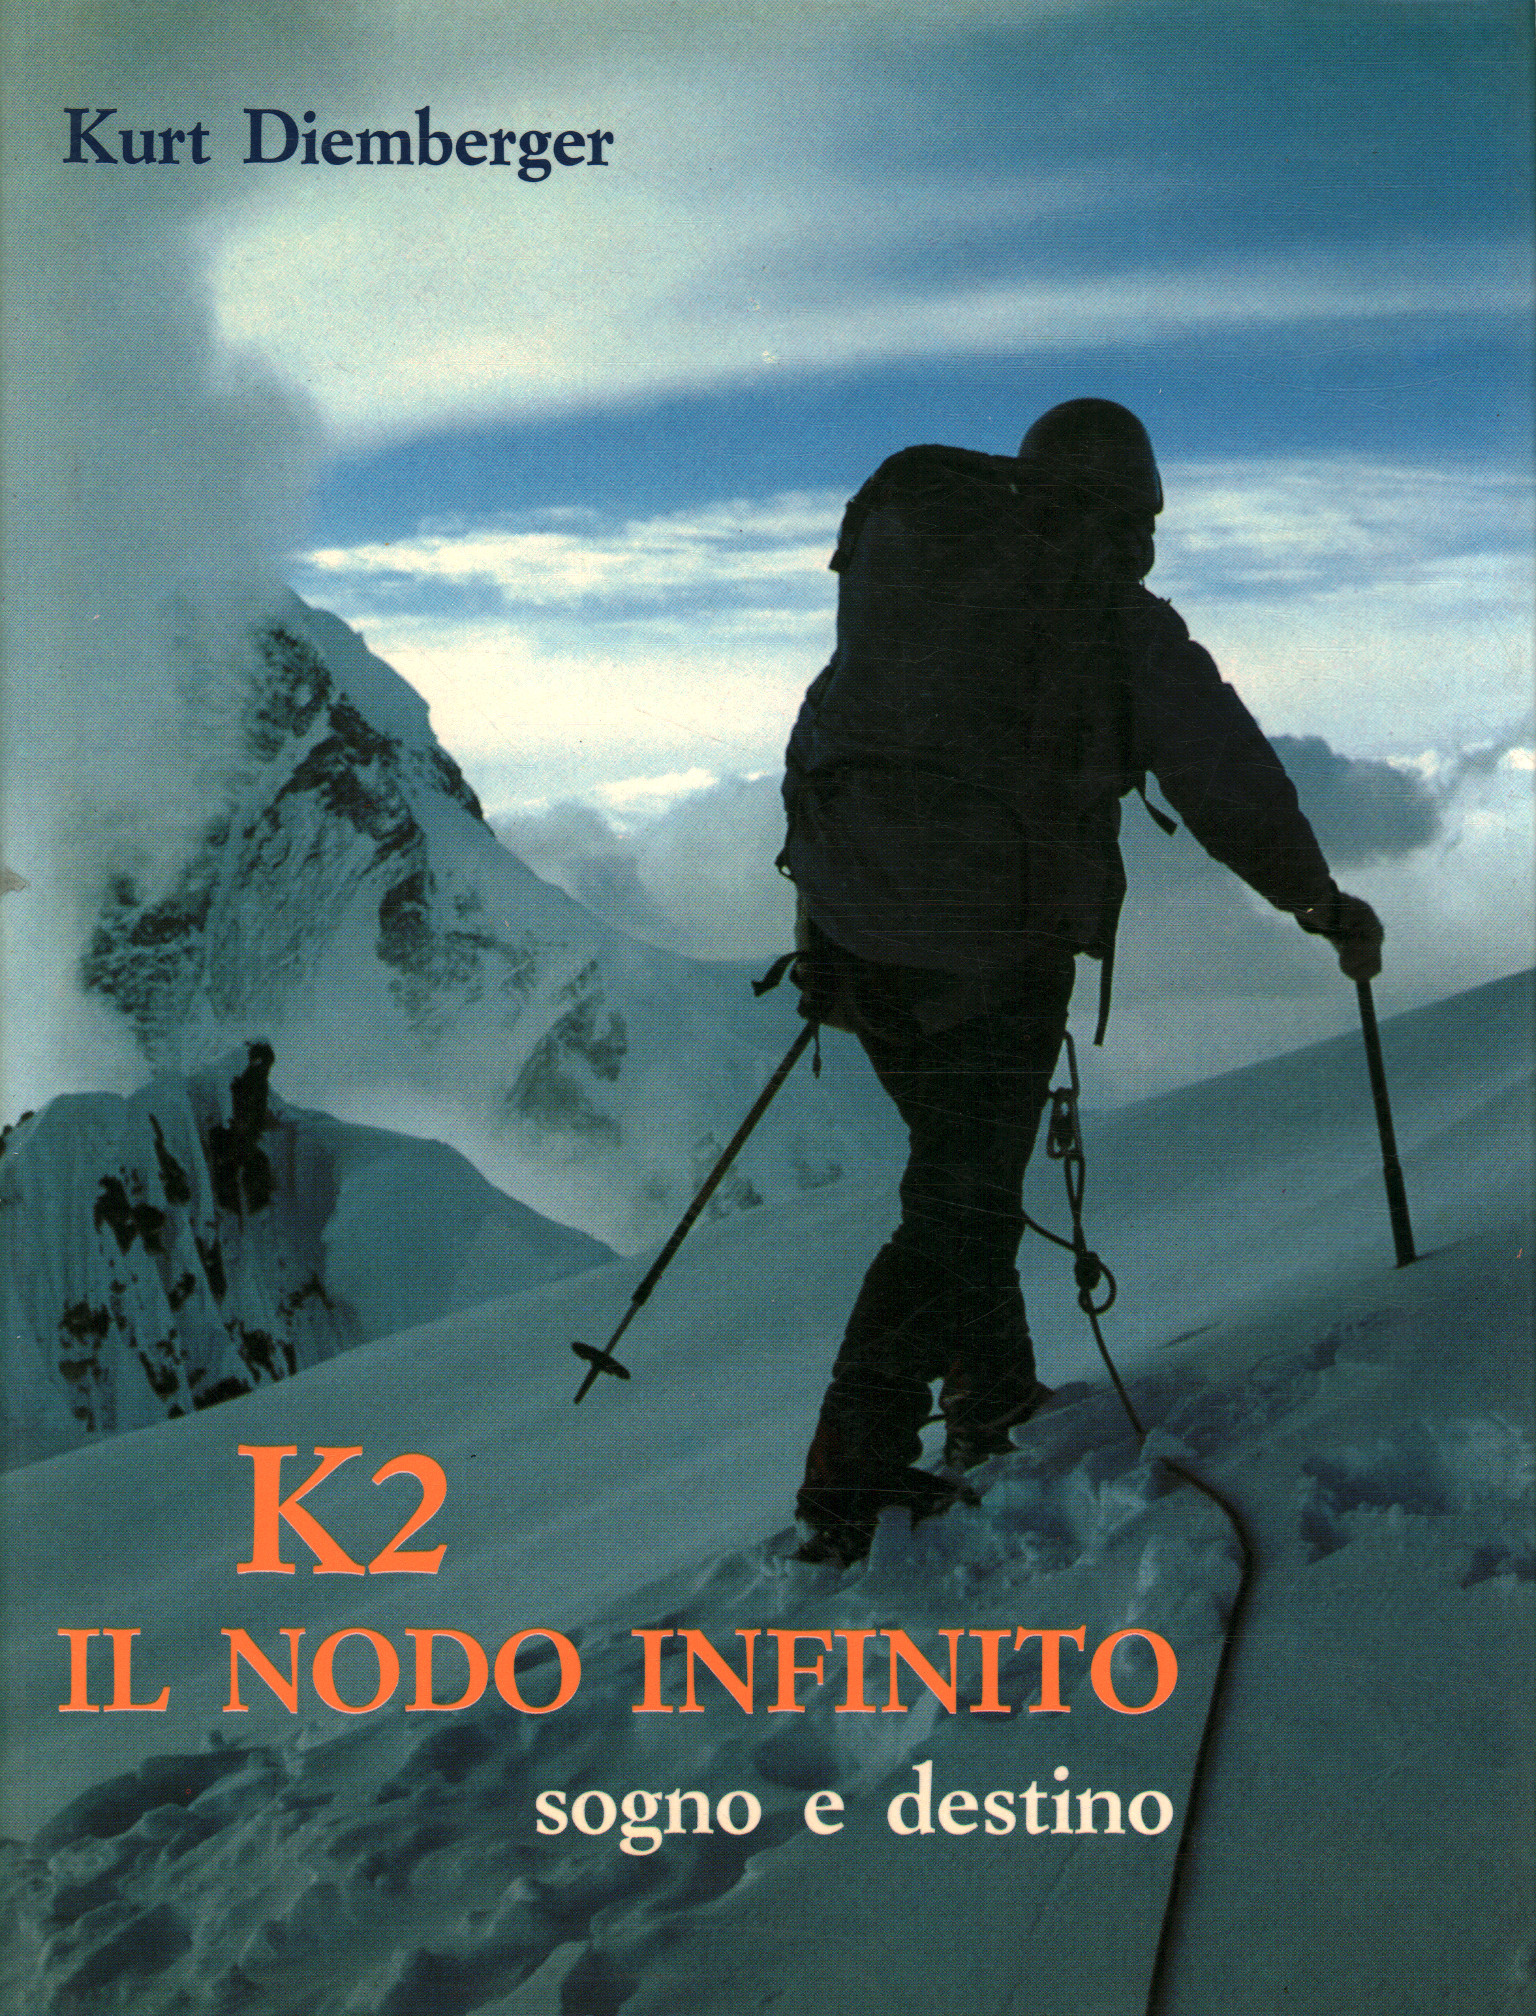 K2 the infinite knot